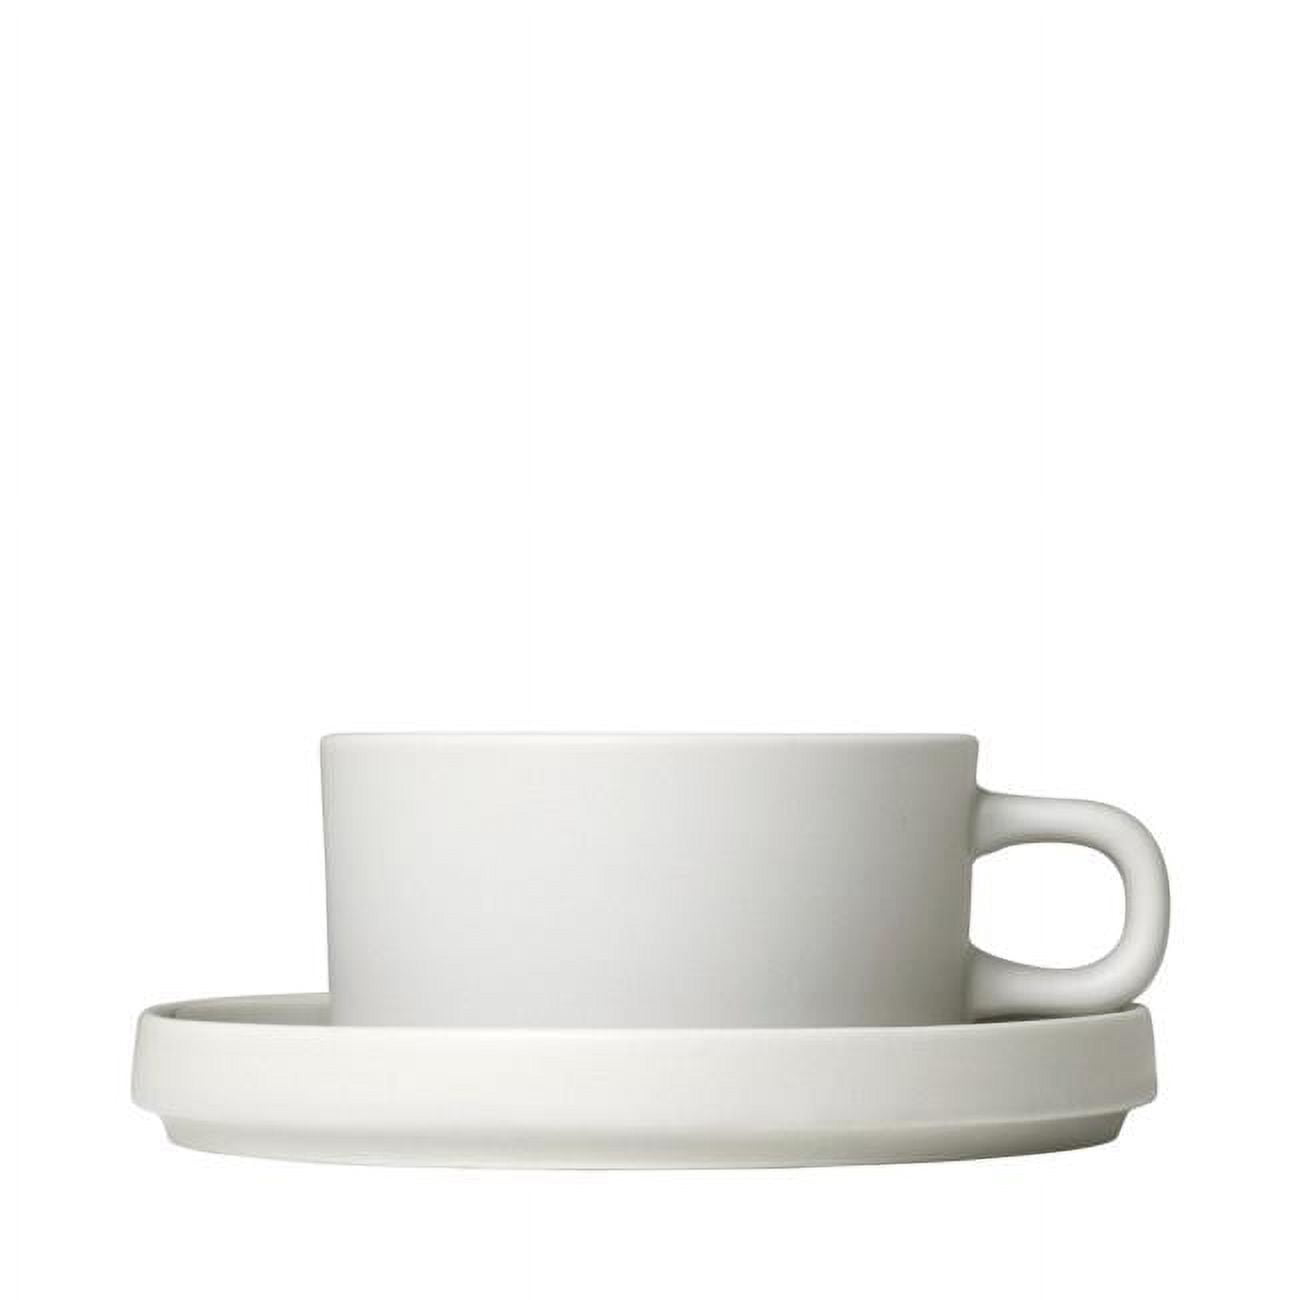 63908 6 Oz Mio Tea Cups With Saucers, Moonbeam - Set Of 2